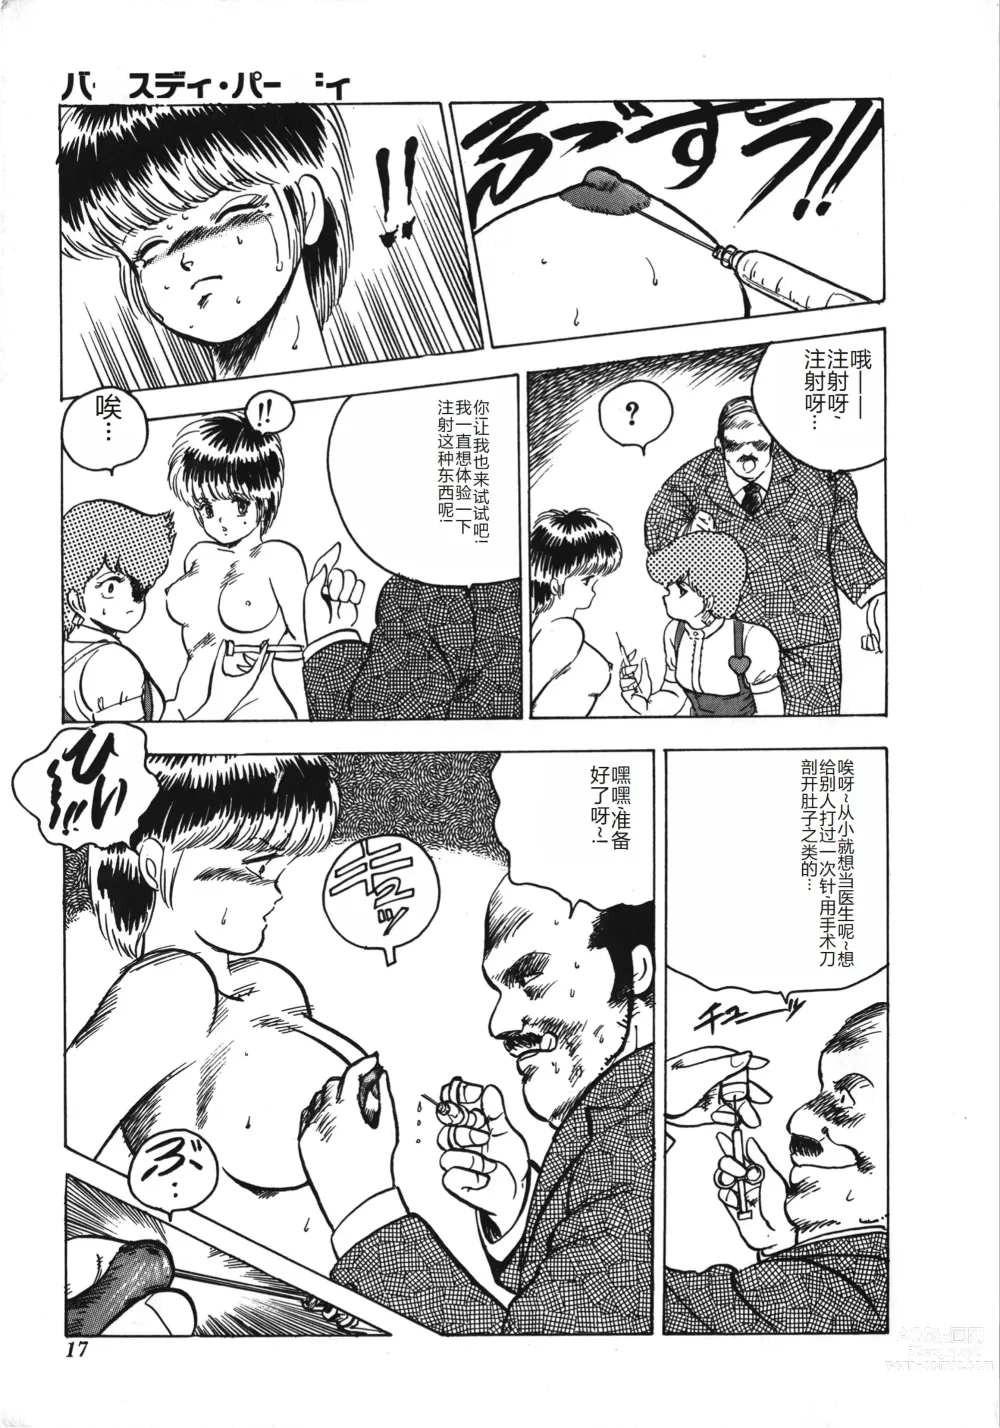 Page 17 of manga Tenshi no Body Talk